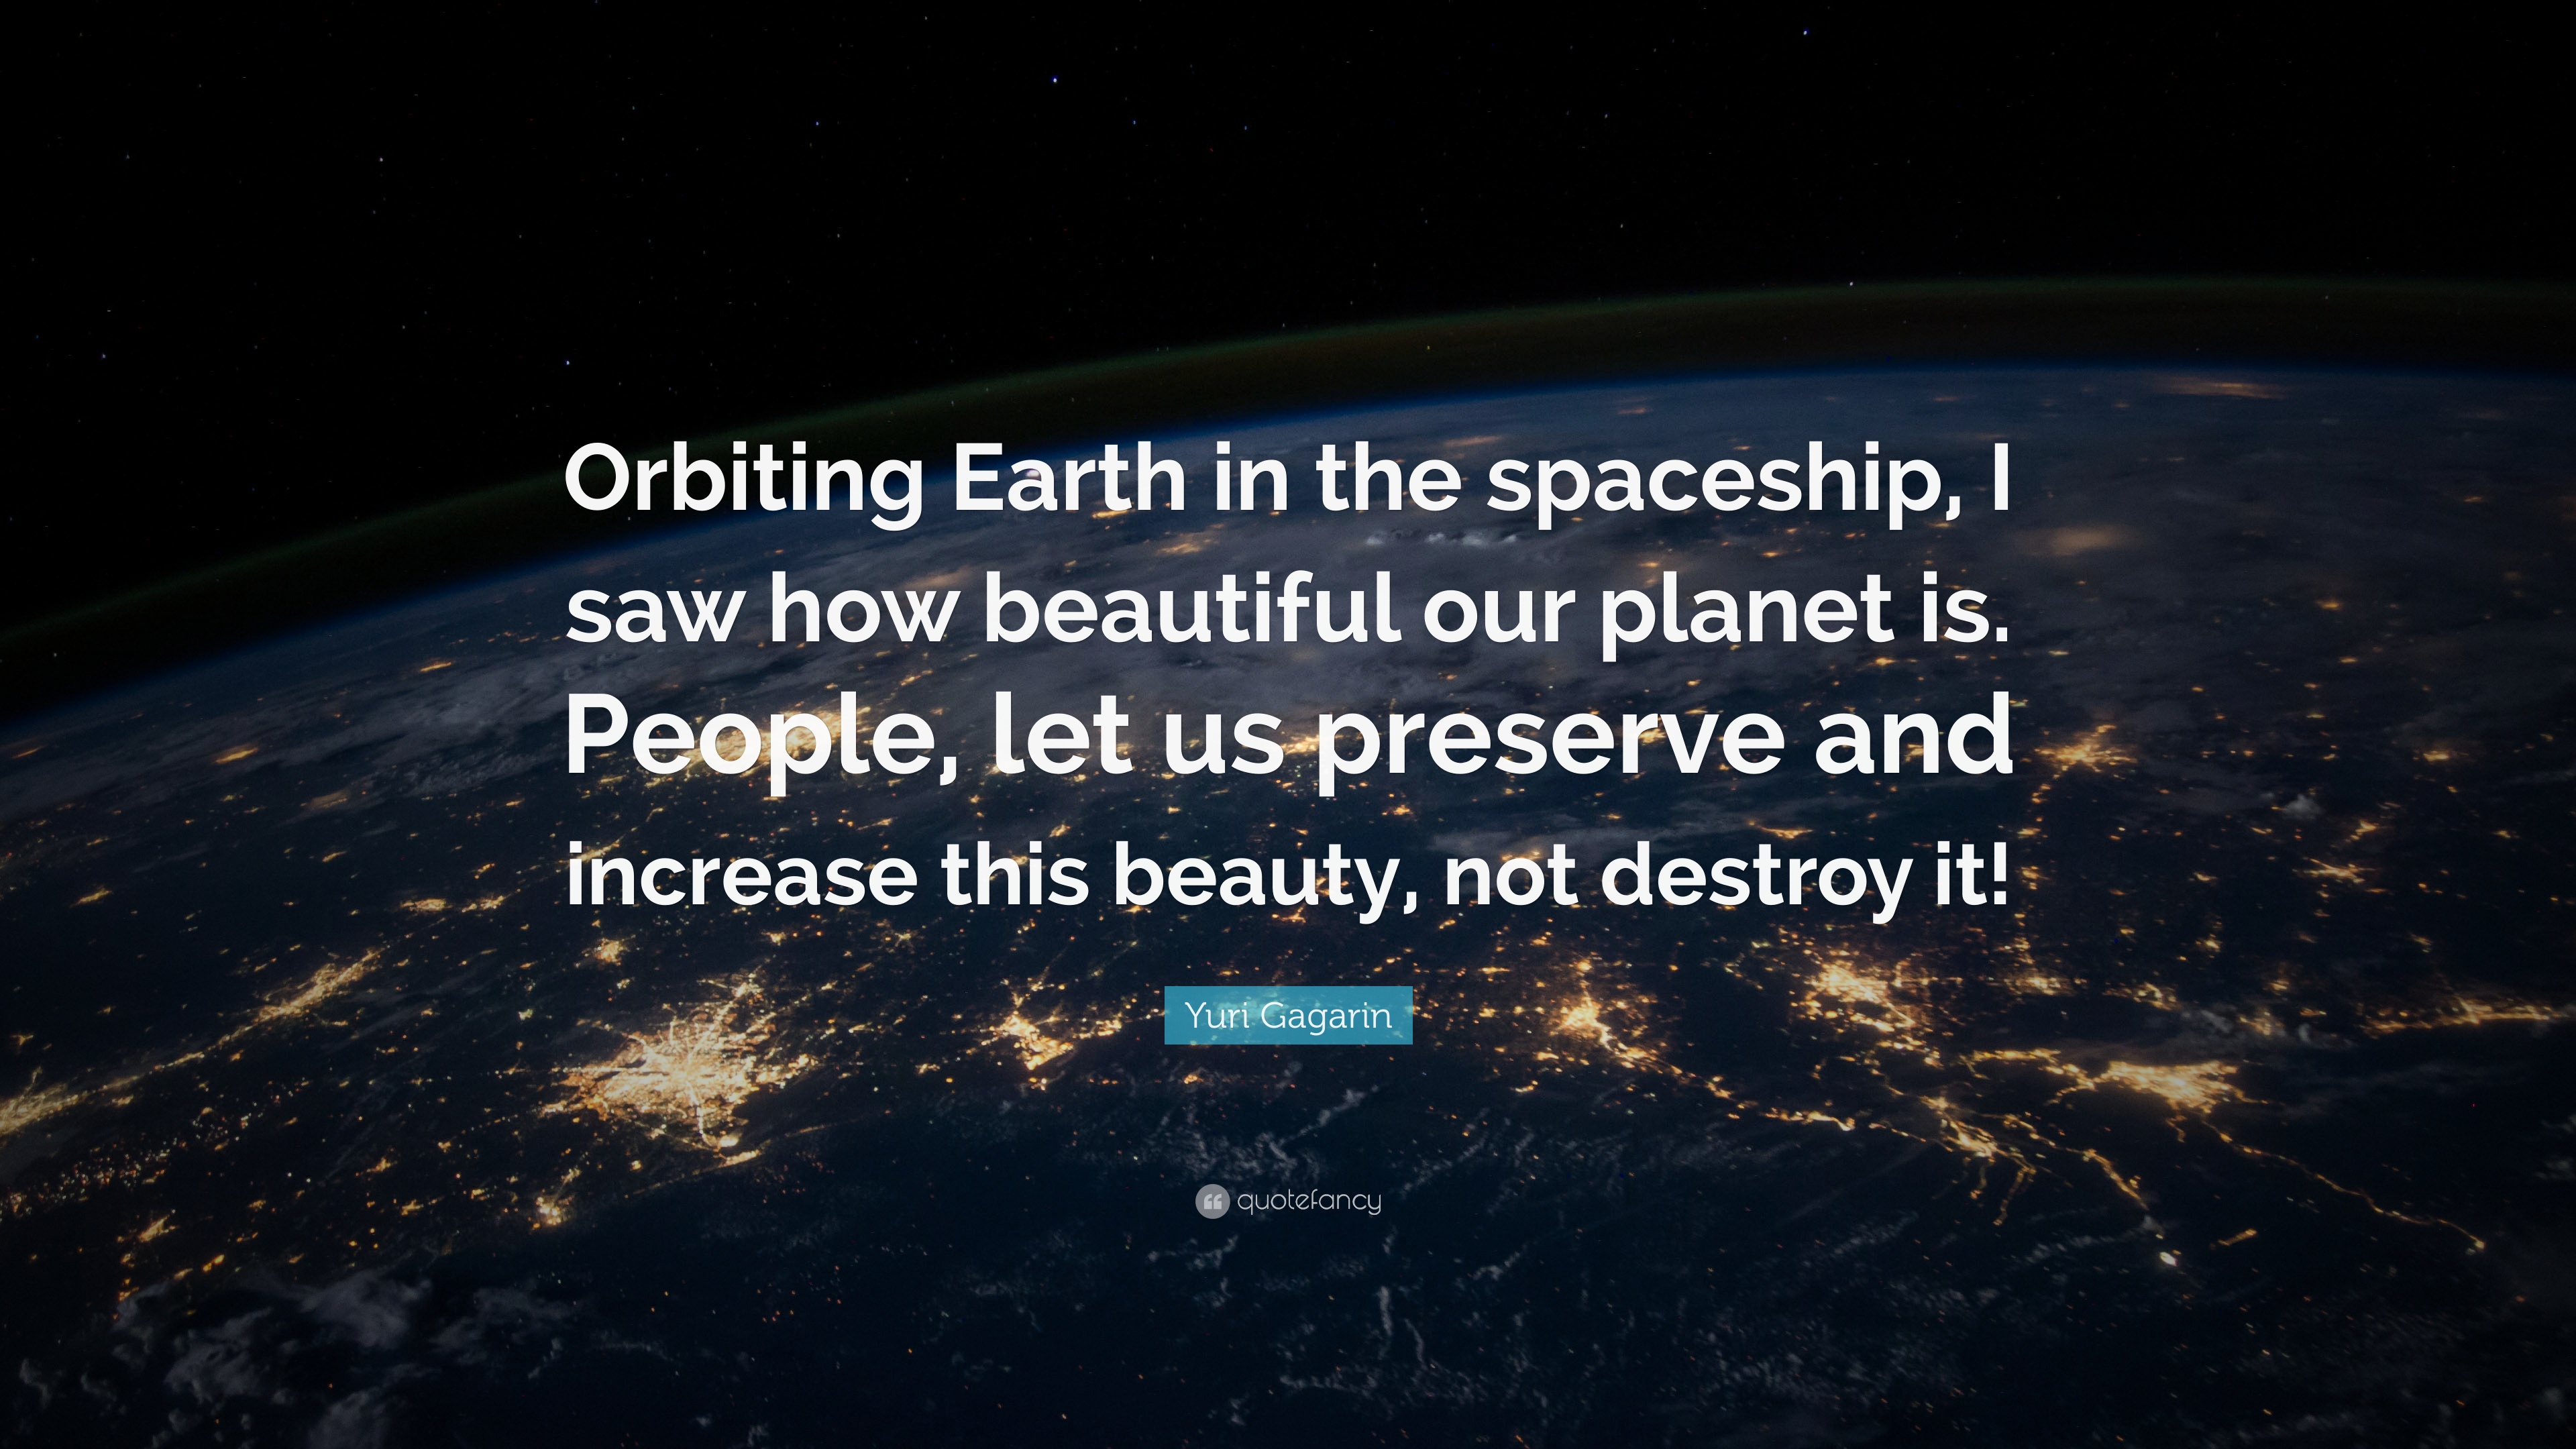 Yuri Gagarin Quote: “Orbiting Earth in the spaceship, I saw how